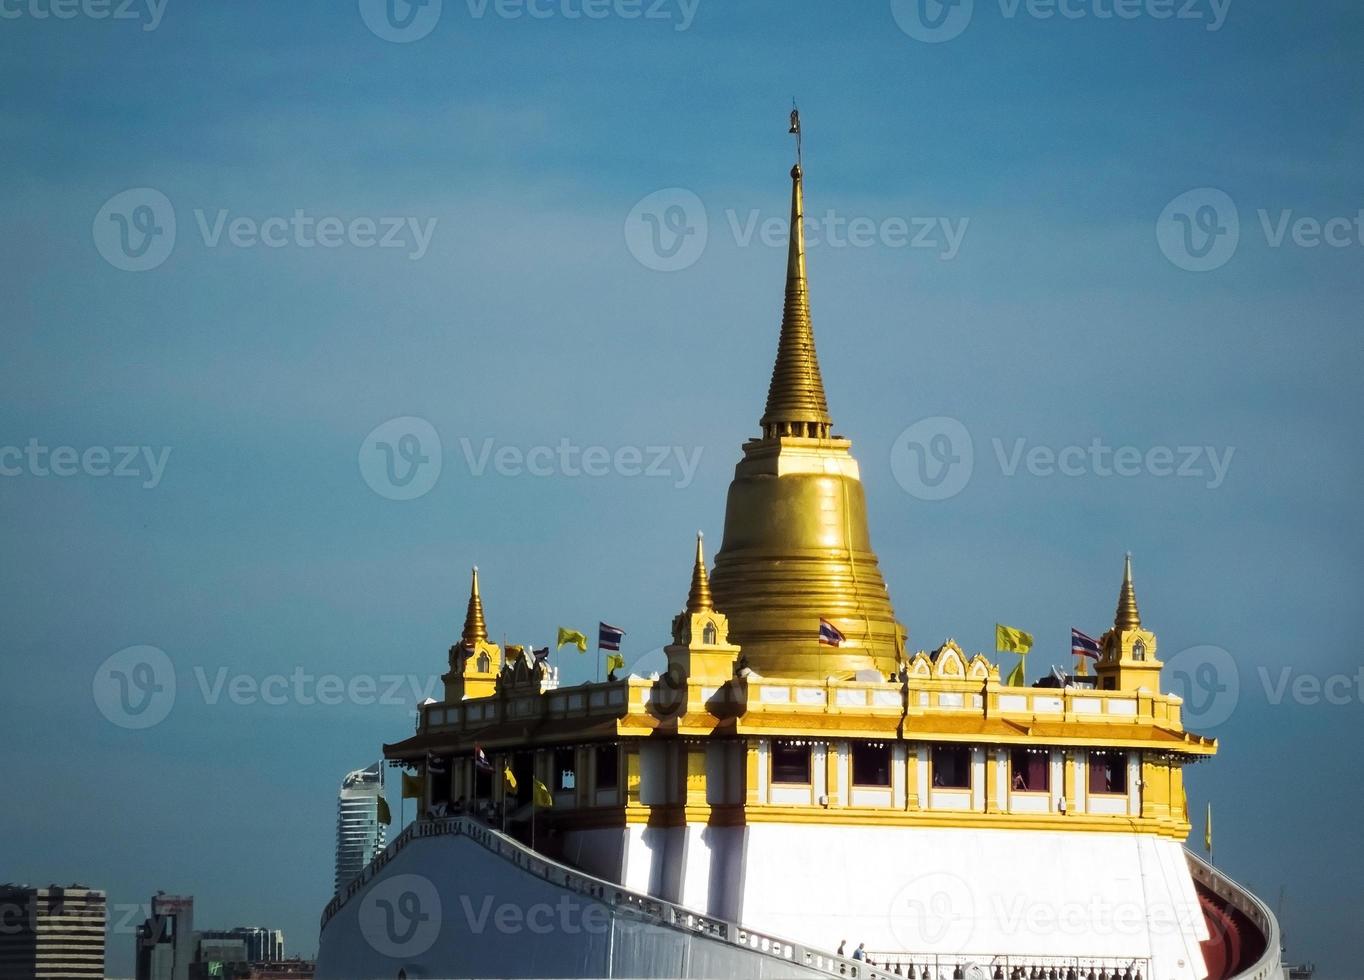 gouden berg phu khao tong bangkok thailand de pagode op de heuvel in wat saket-tempel. de tempel wat sa ket is een oude tempel in de ayutthaya-periode. foto